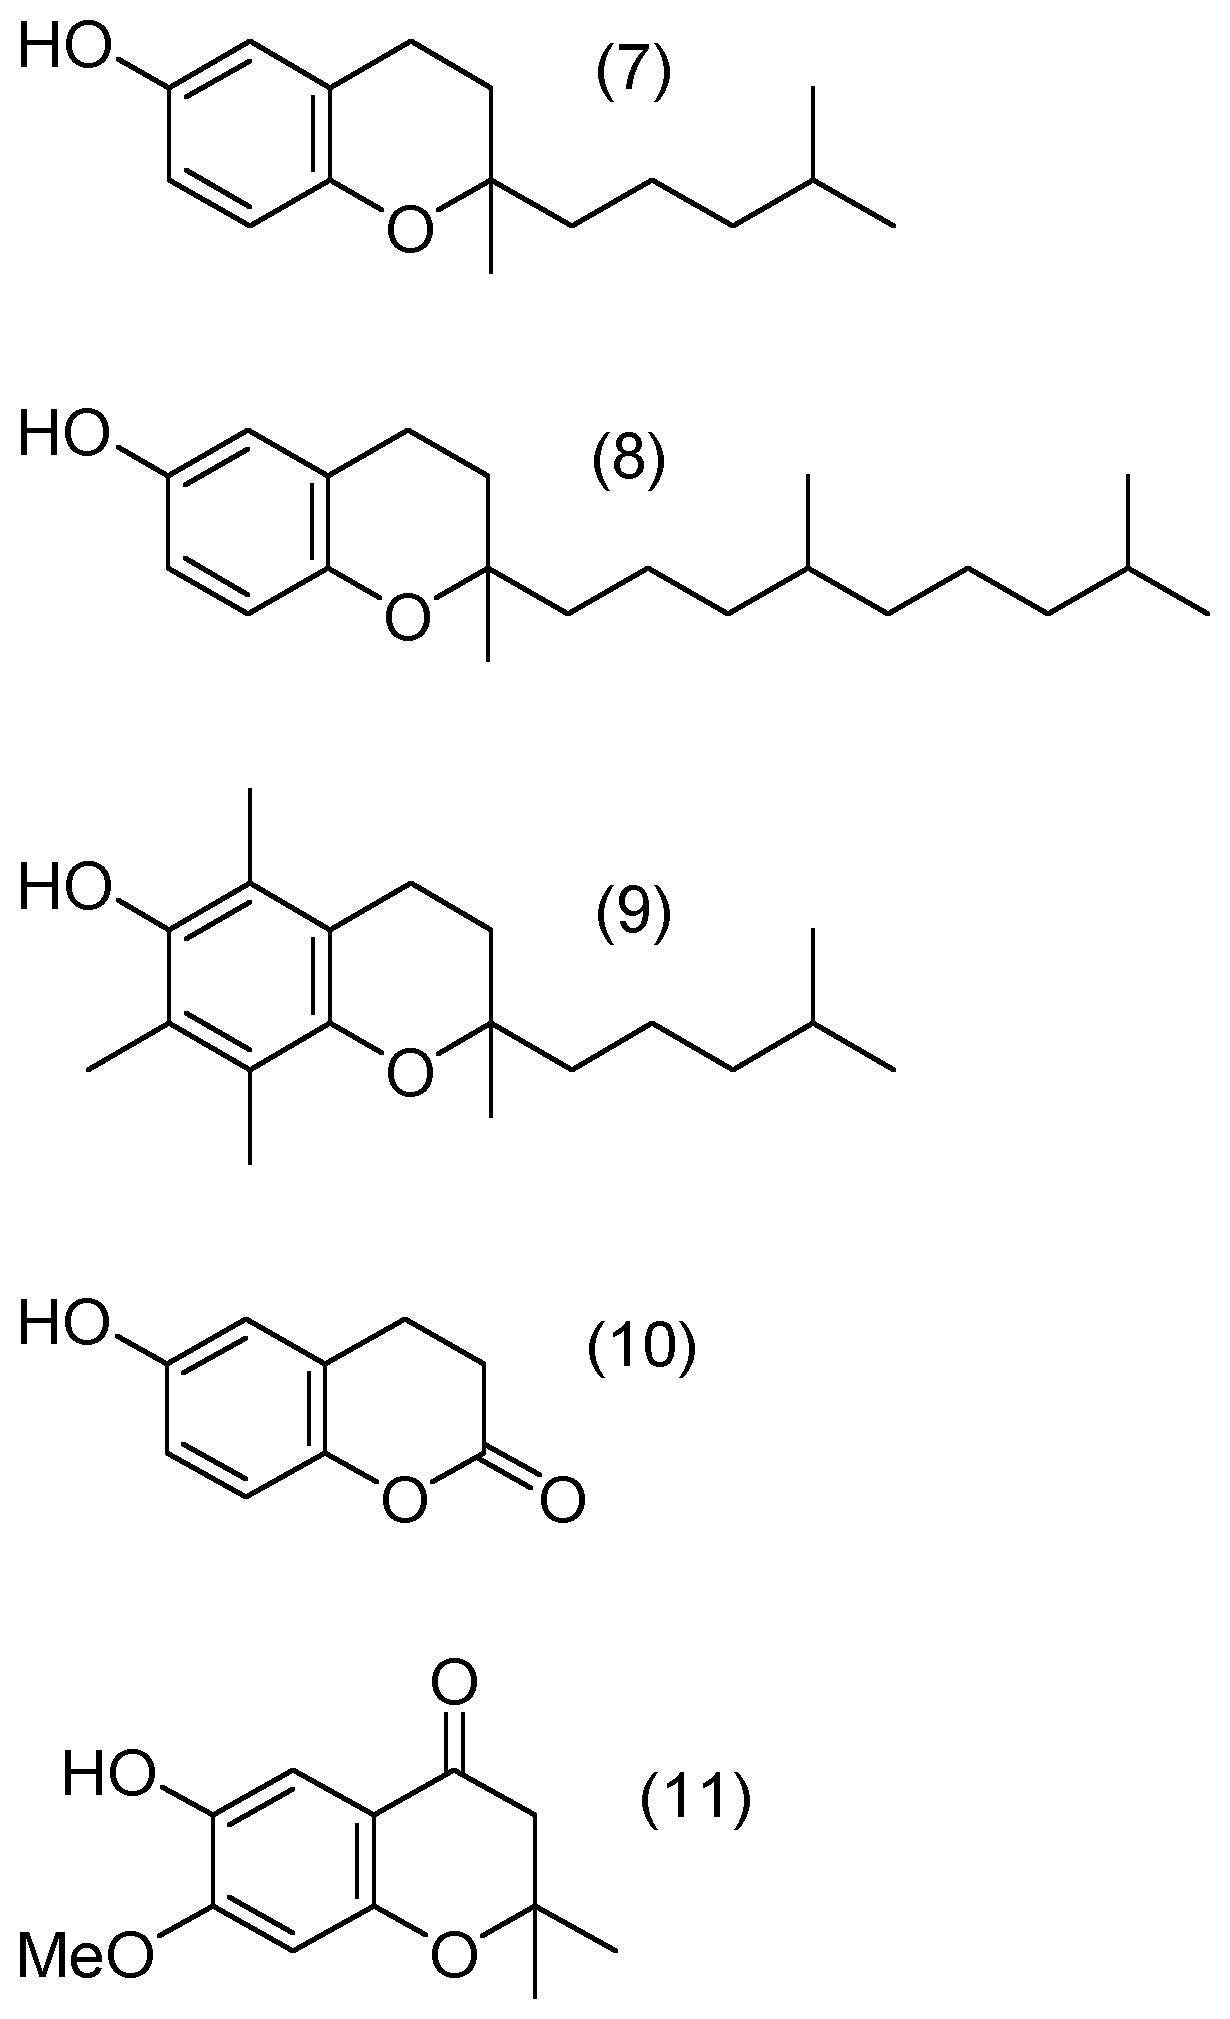 Novel use of substituted chroman-6-ols